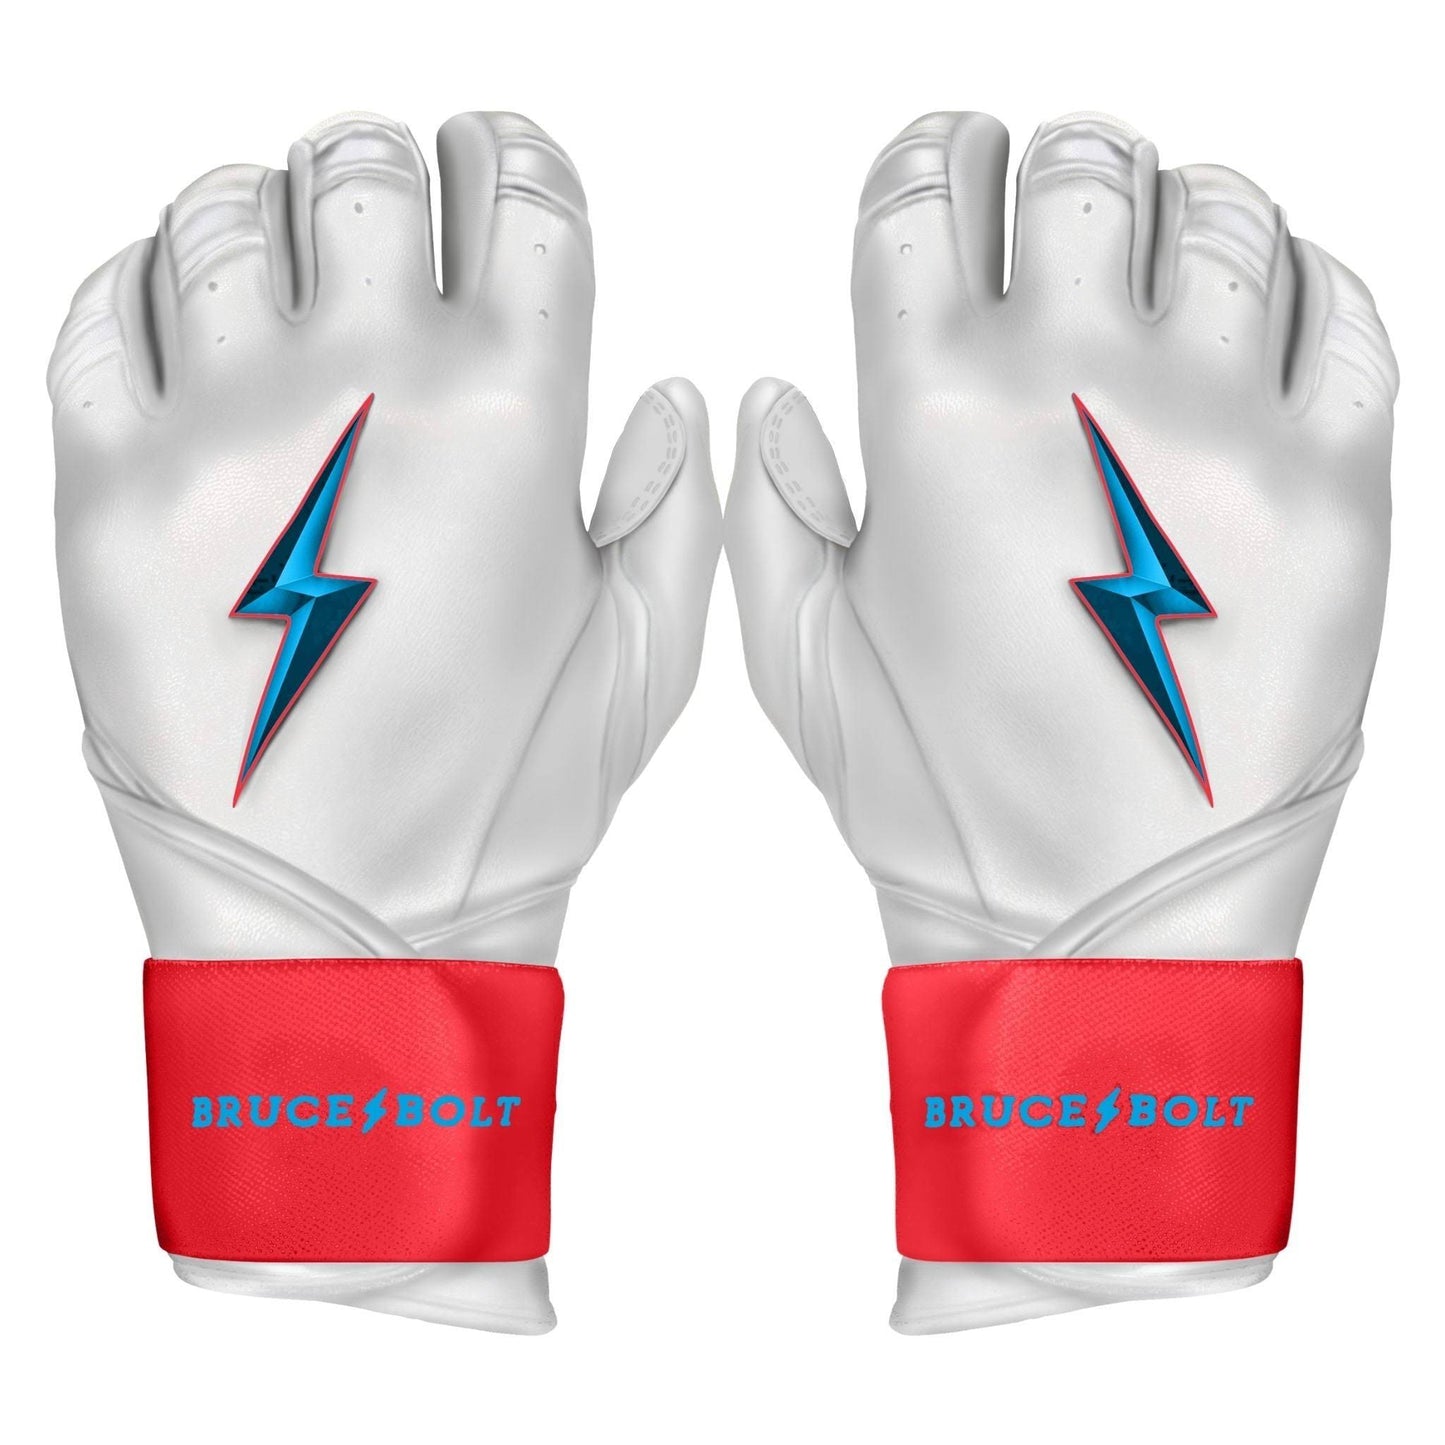 Premium Pro Bader Series Long Cuff Batting Gloves | Pink